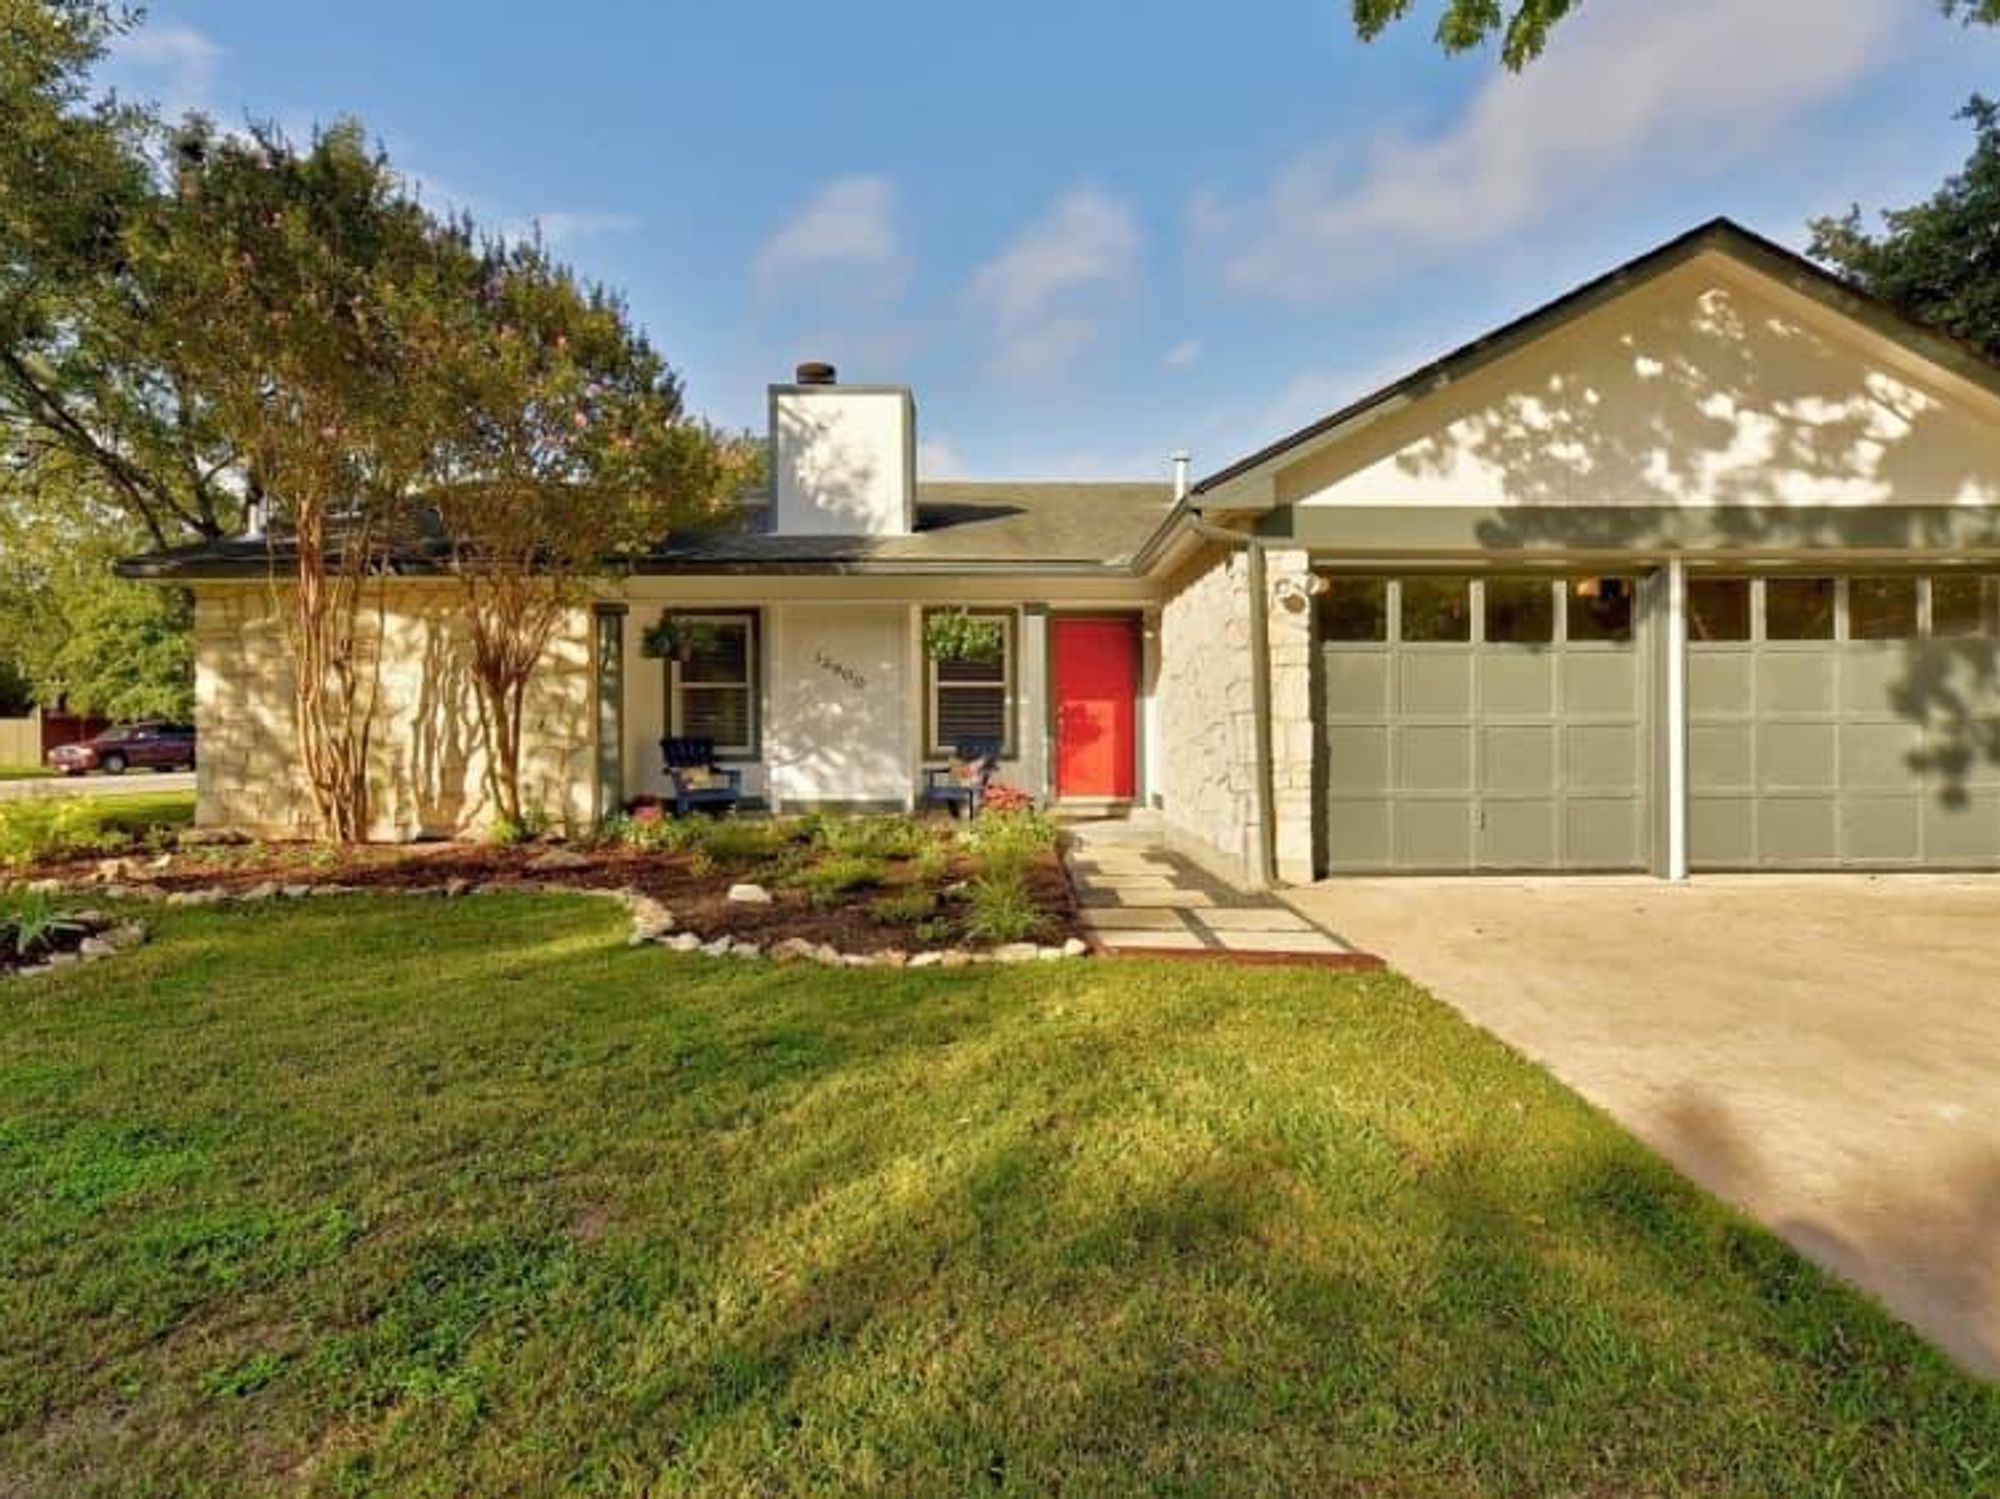 Northwest Austin home for sale